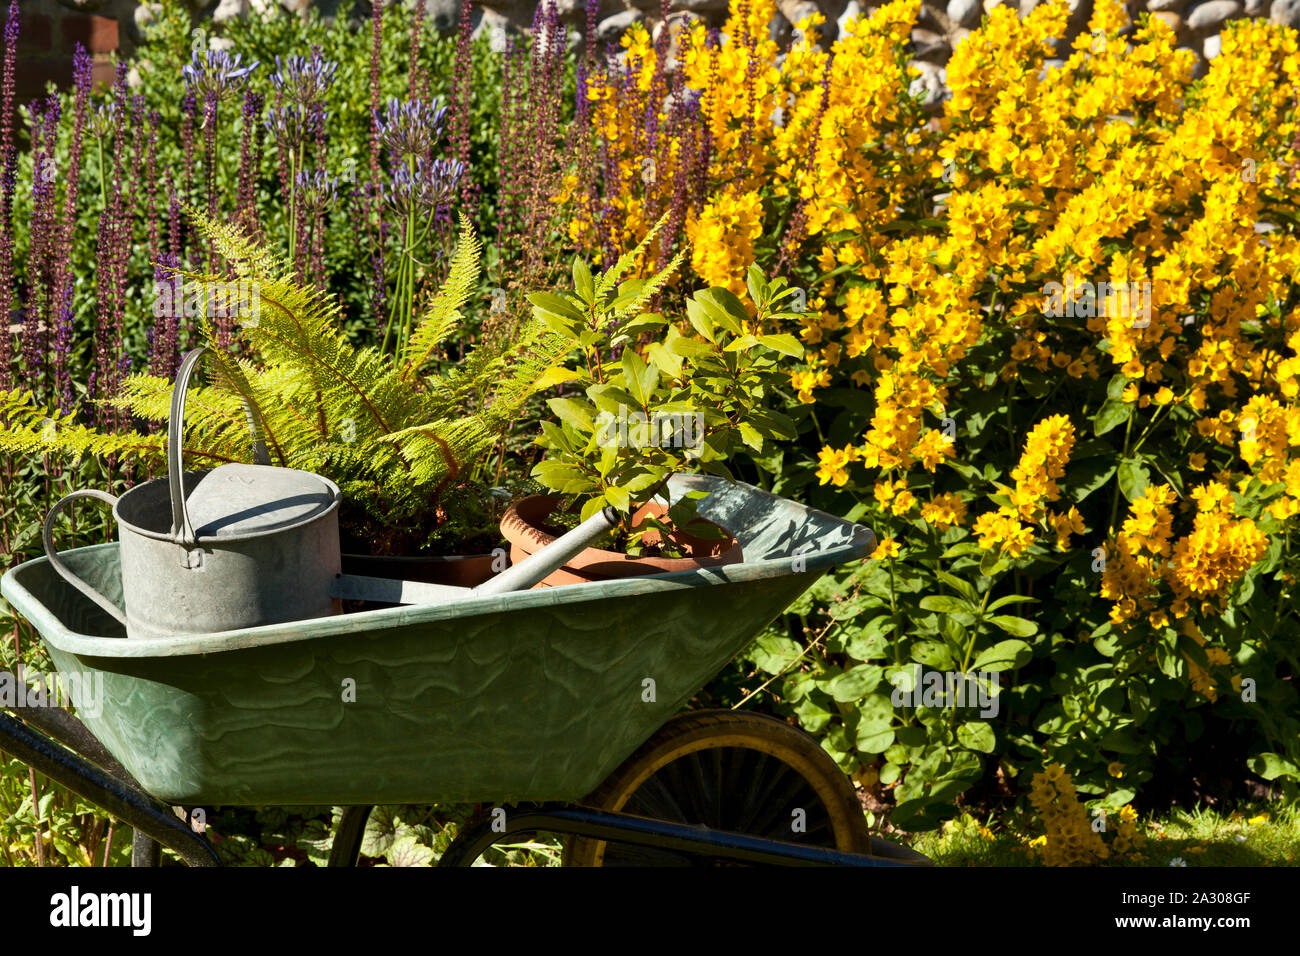 A wheelbarrow standing next to a flowering herbaceous border Stock Photo